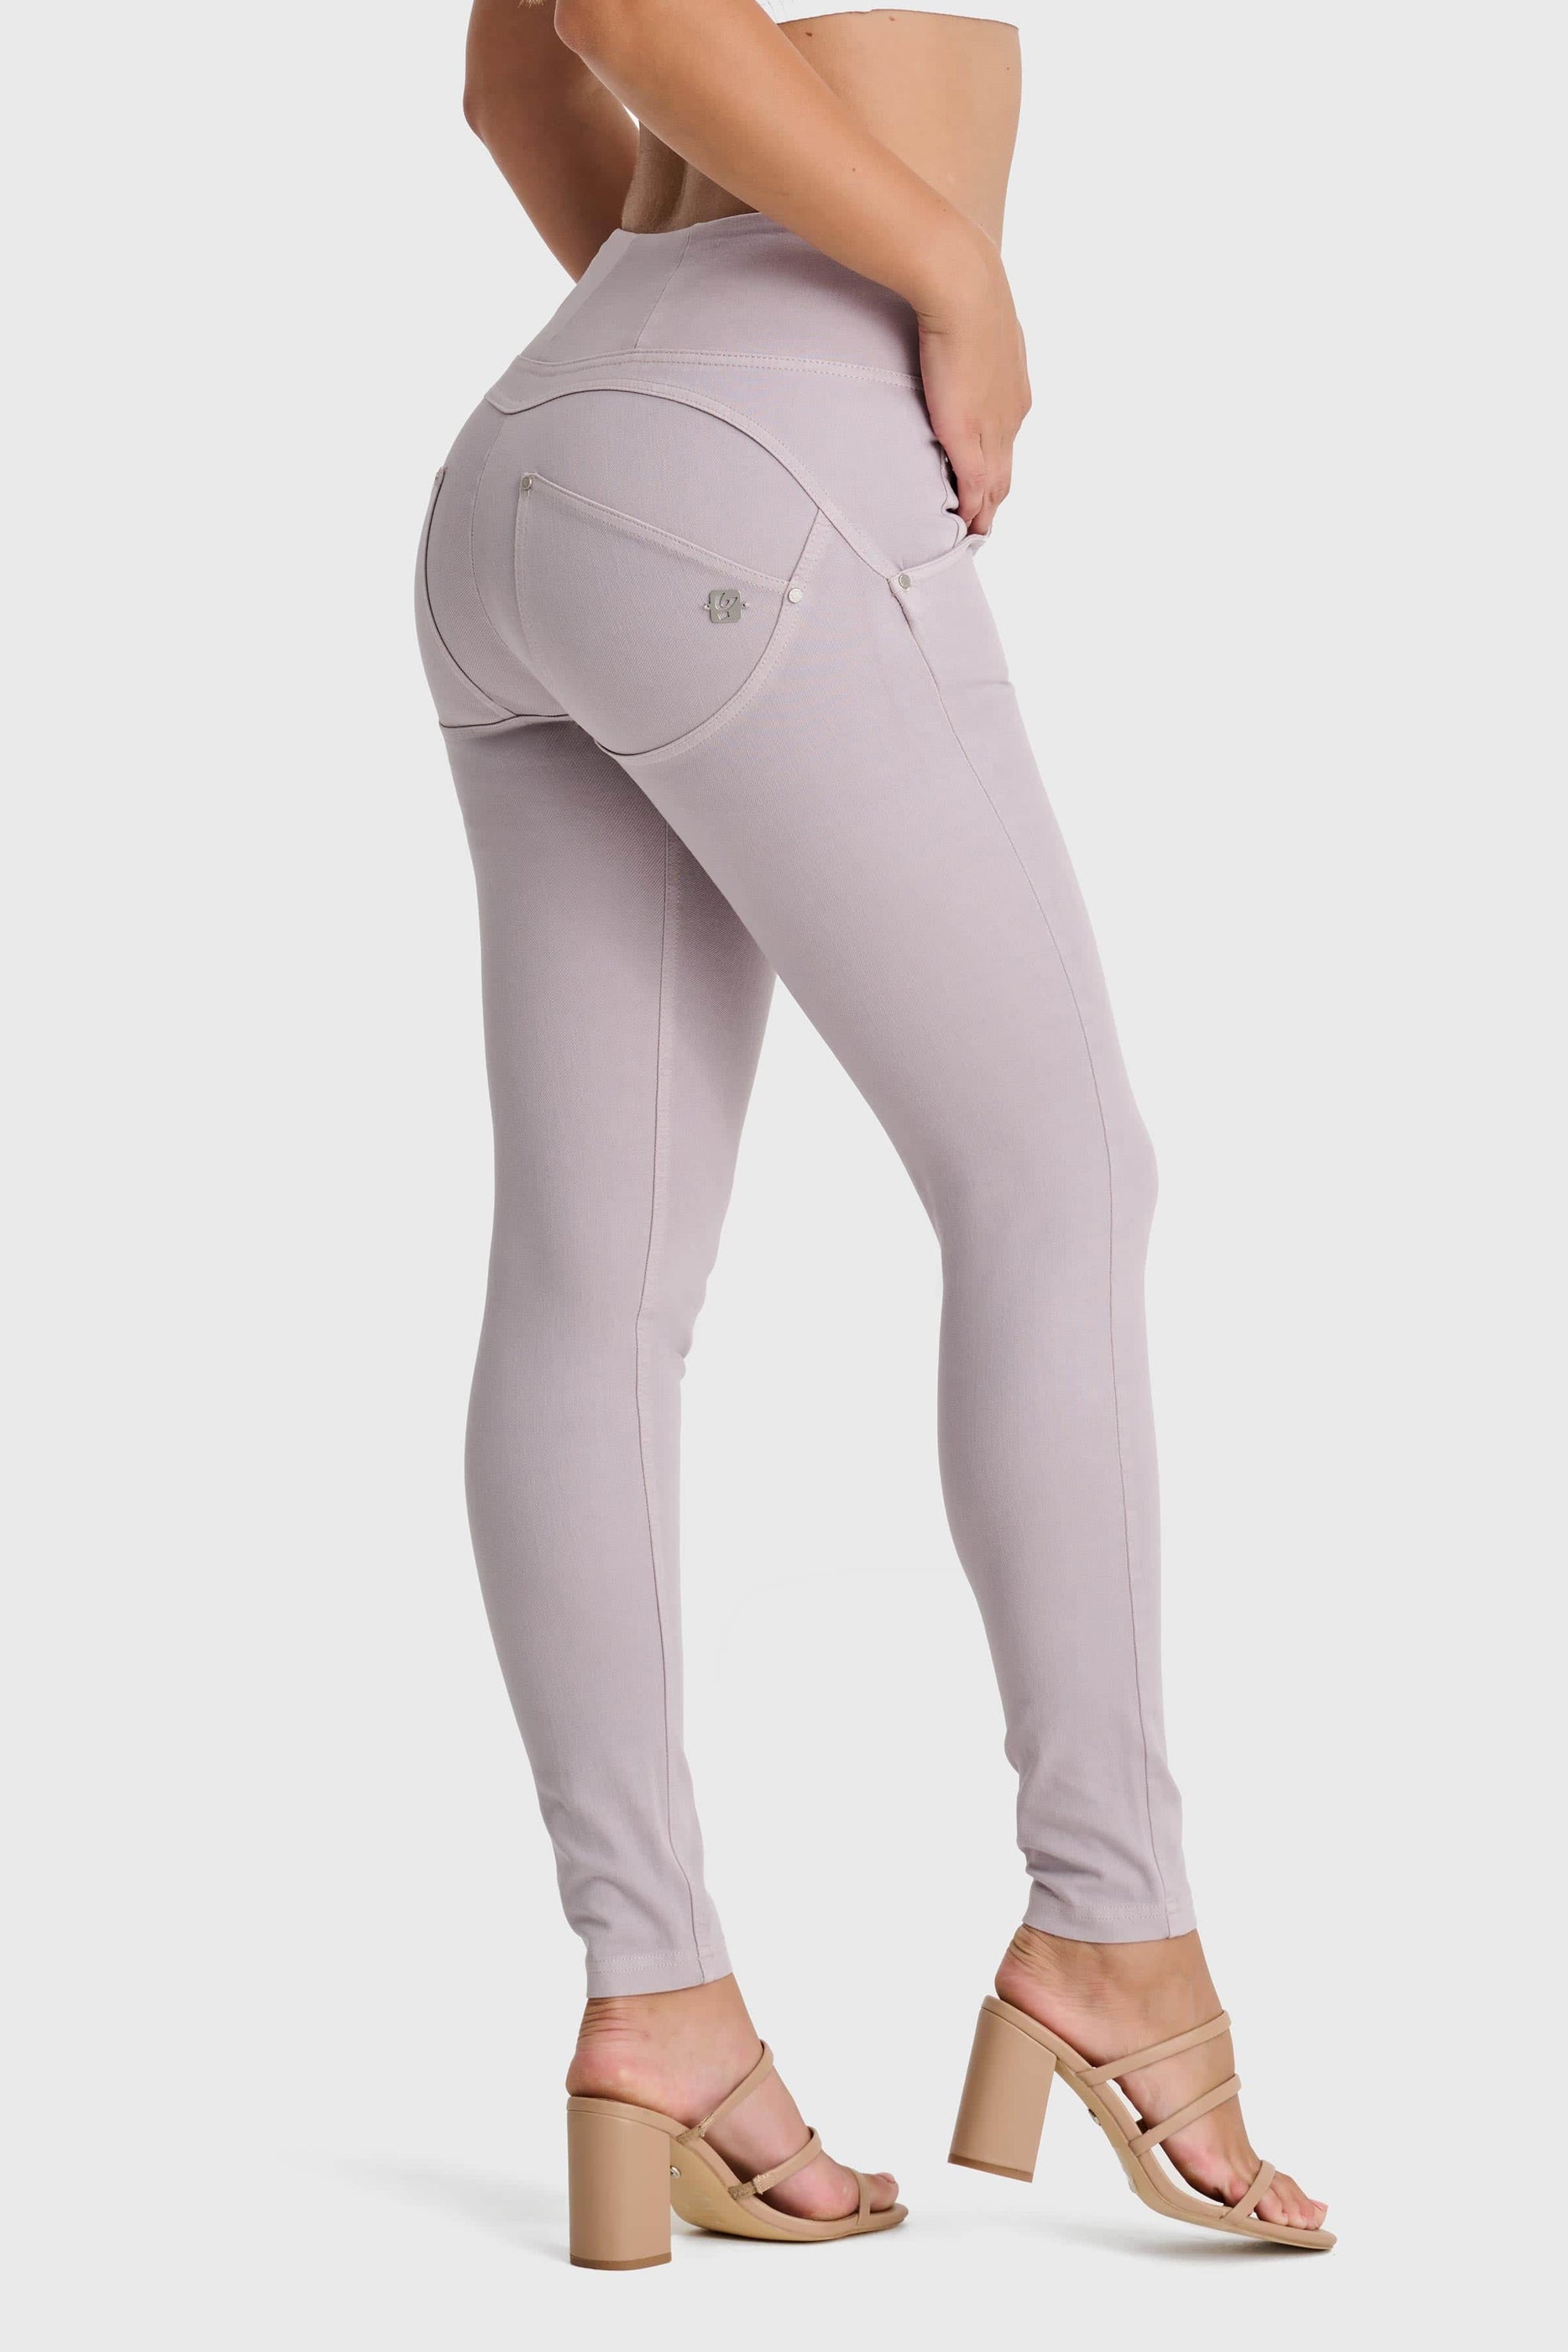 WR.UP® Snug Jeans - High Waisted - Full Length - Light Grey 1